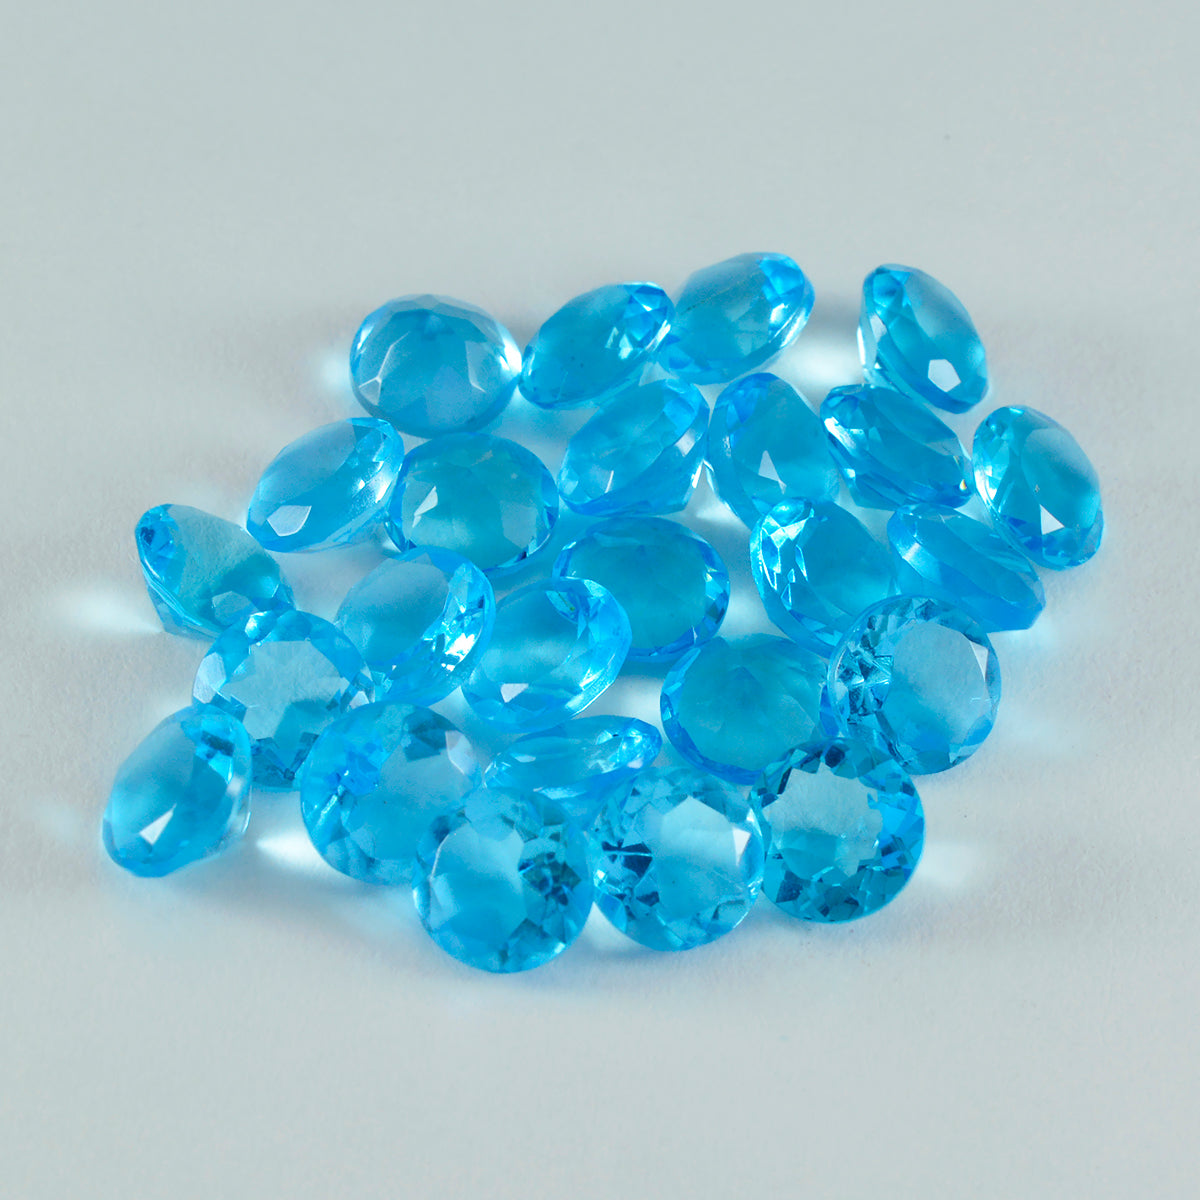 Riyogems 1PC Blue Topaz CZ Faceted 6x6 mm Round Shape beauty Quality Loose Gems